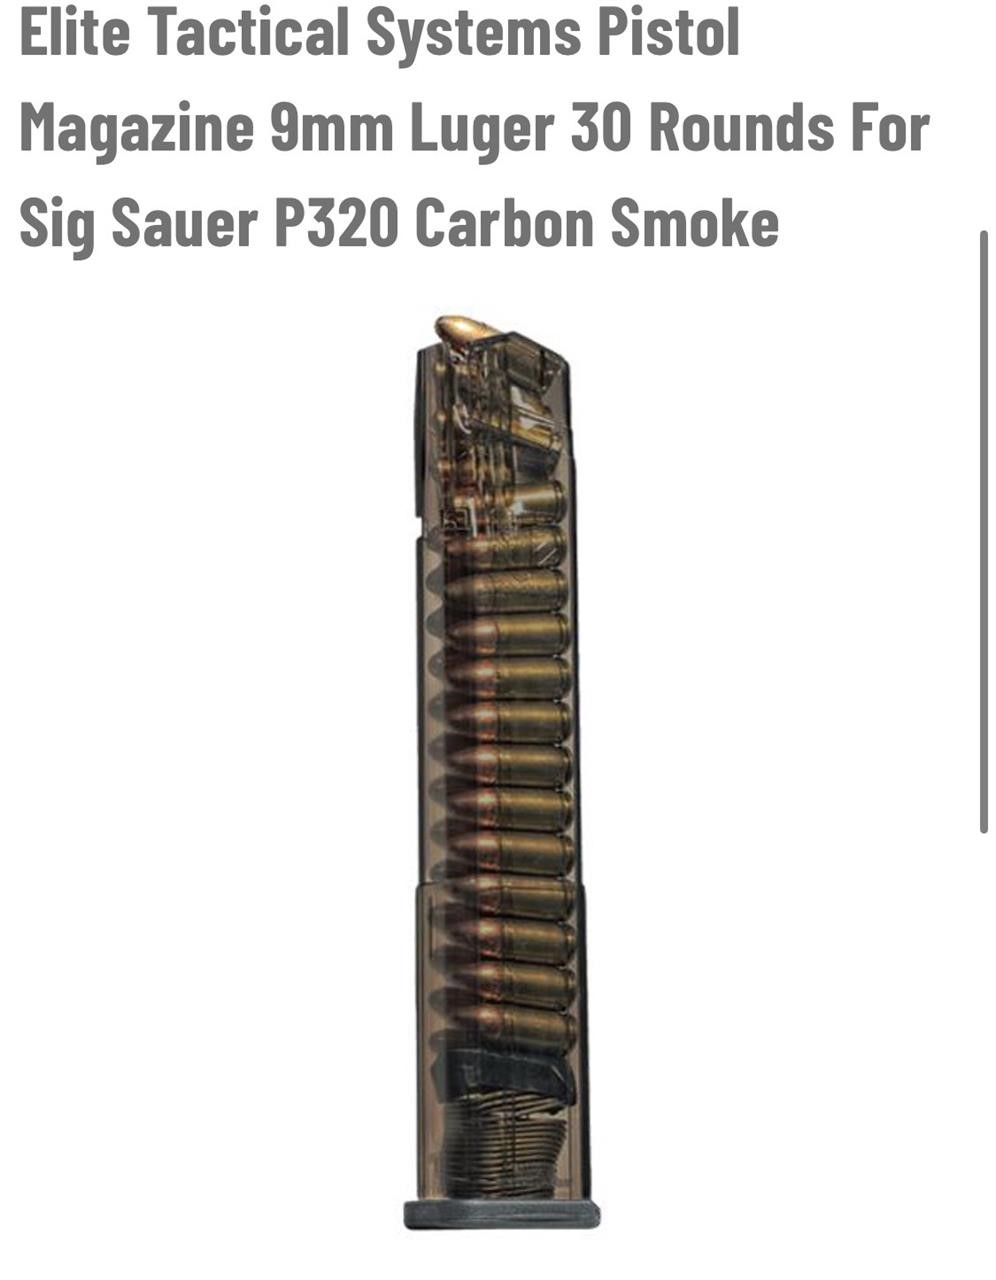 Sig Sauer P320 Carbon Smoke